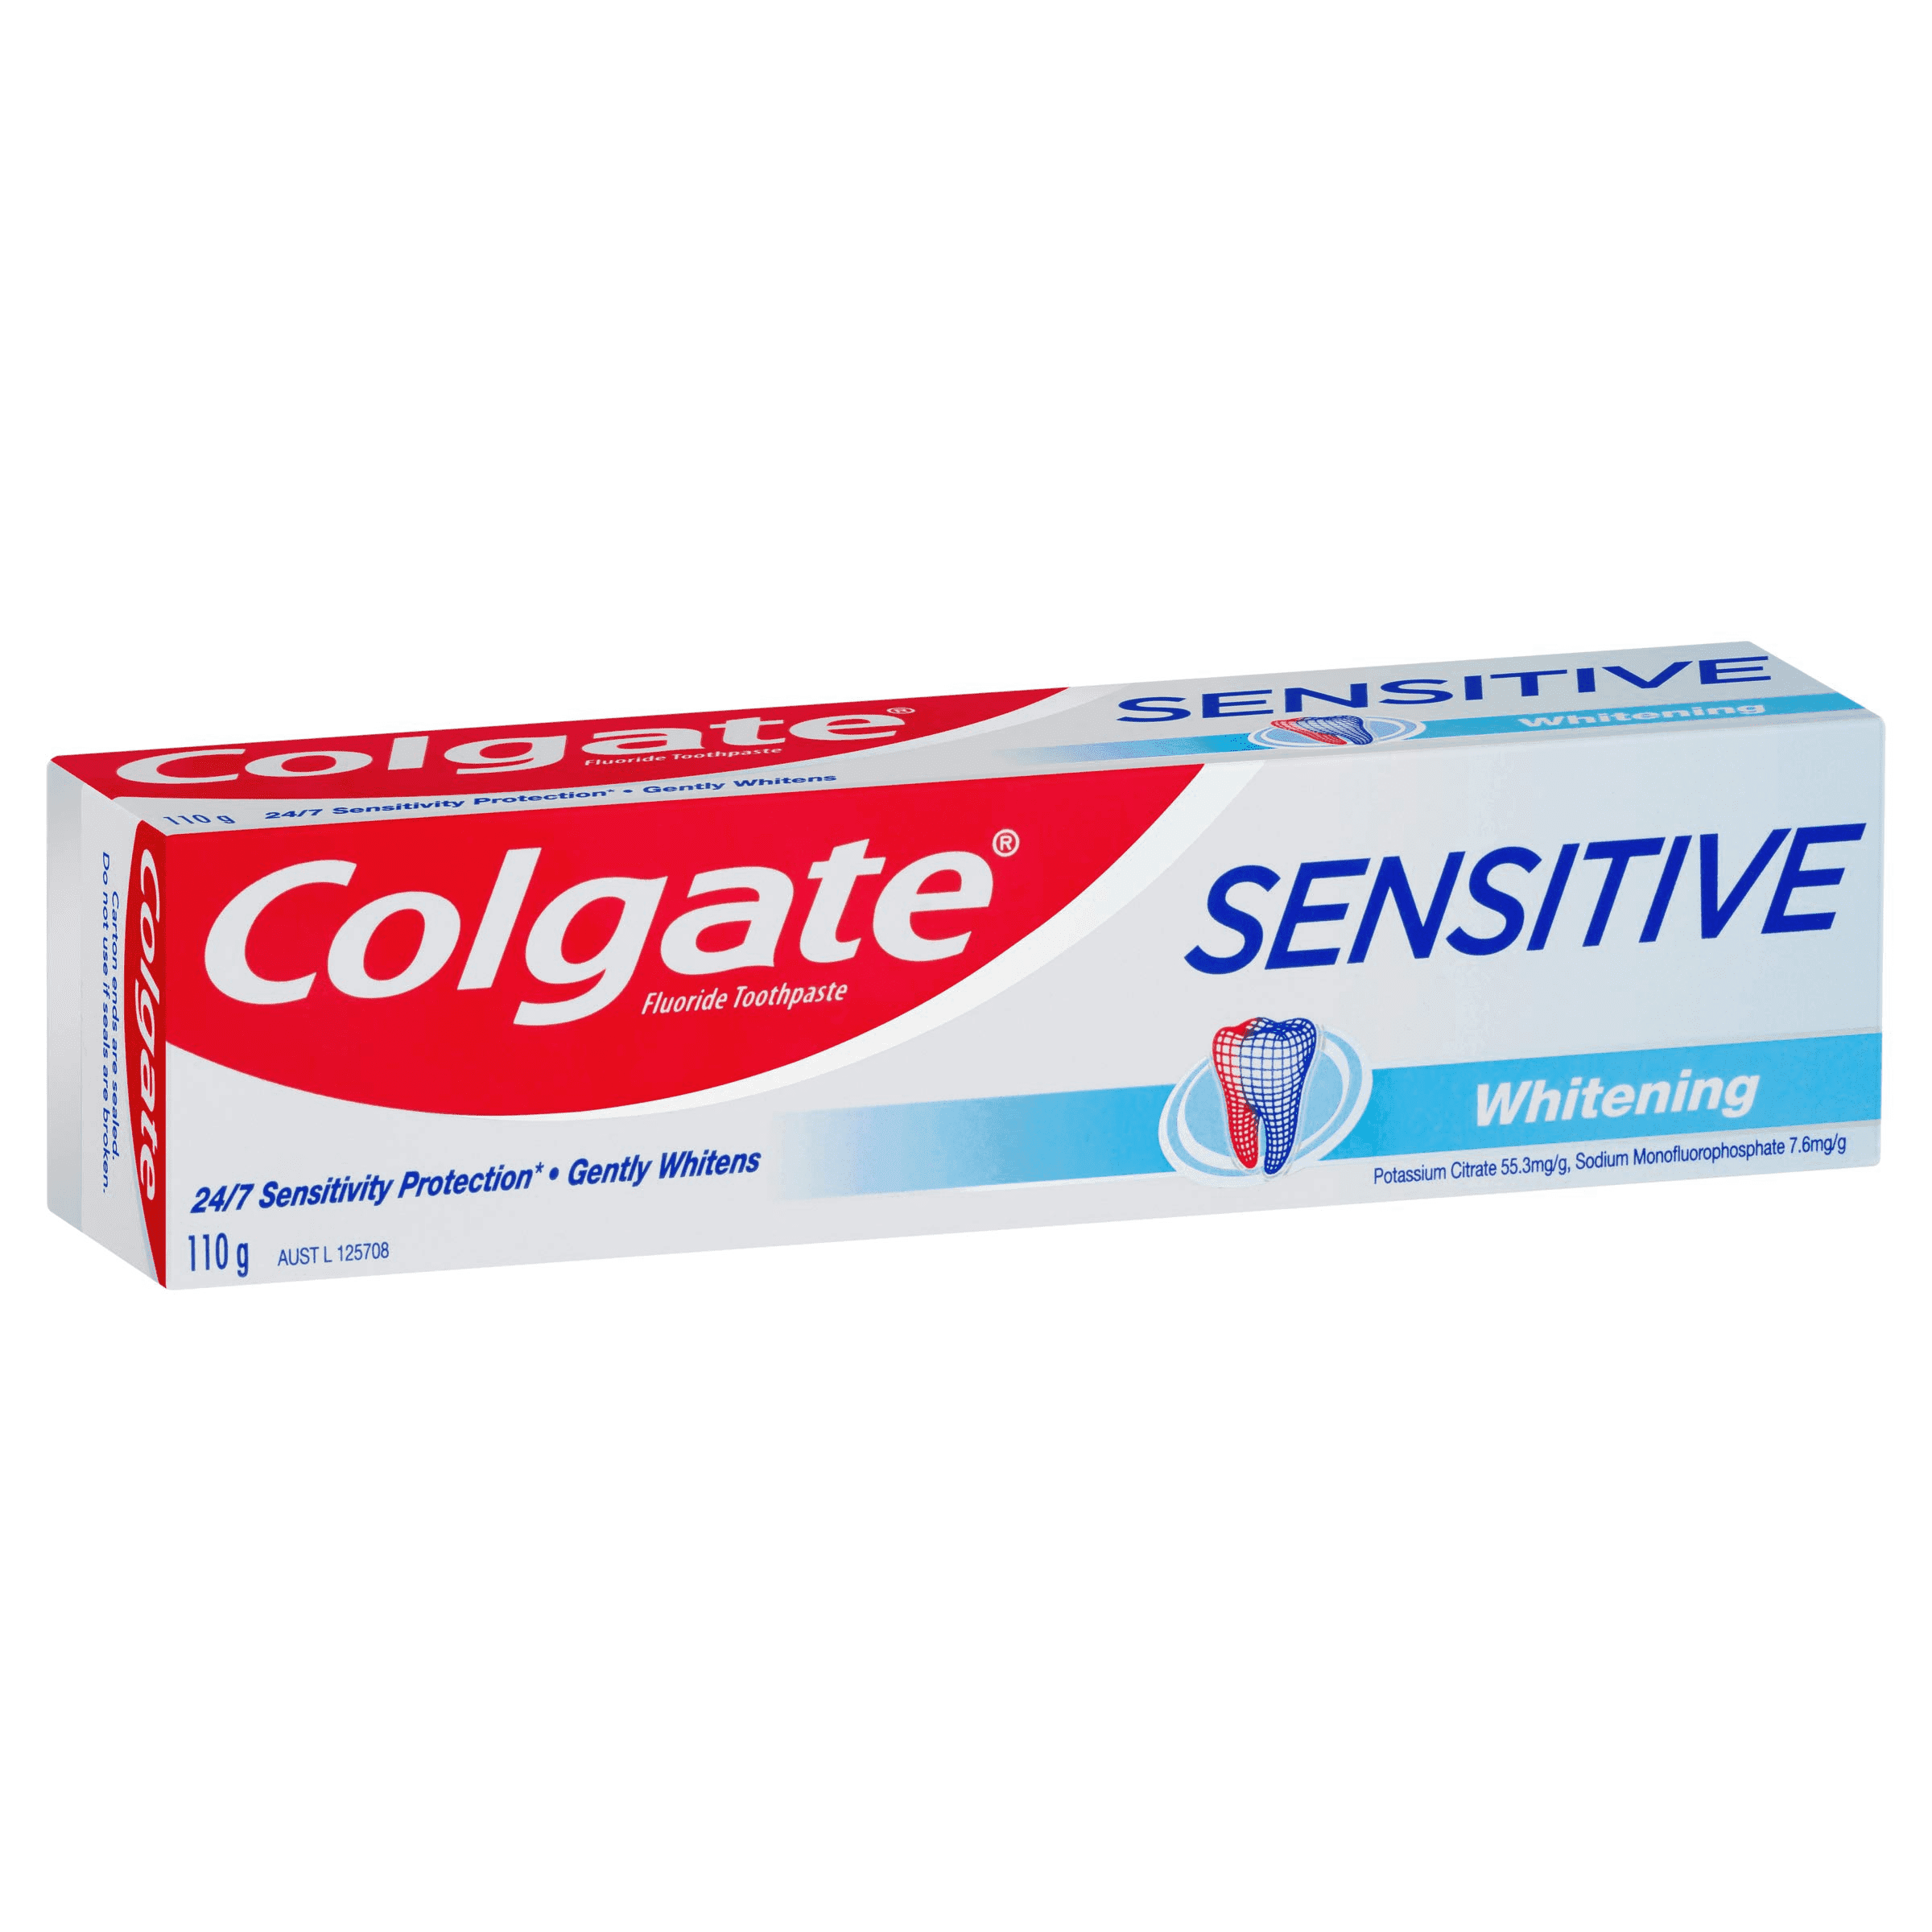 3 Colgate 110g Sensitive Fluoride Whitening Toothpaste - www.indiancart.com.au - Mouth Care - Colgate - Colgate